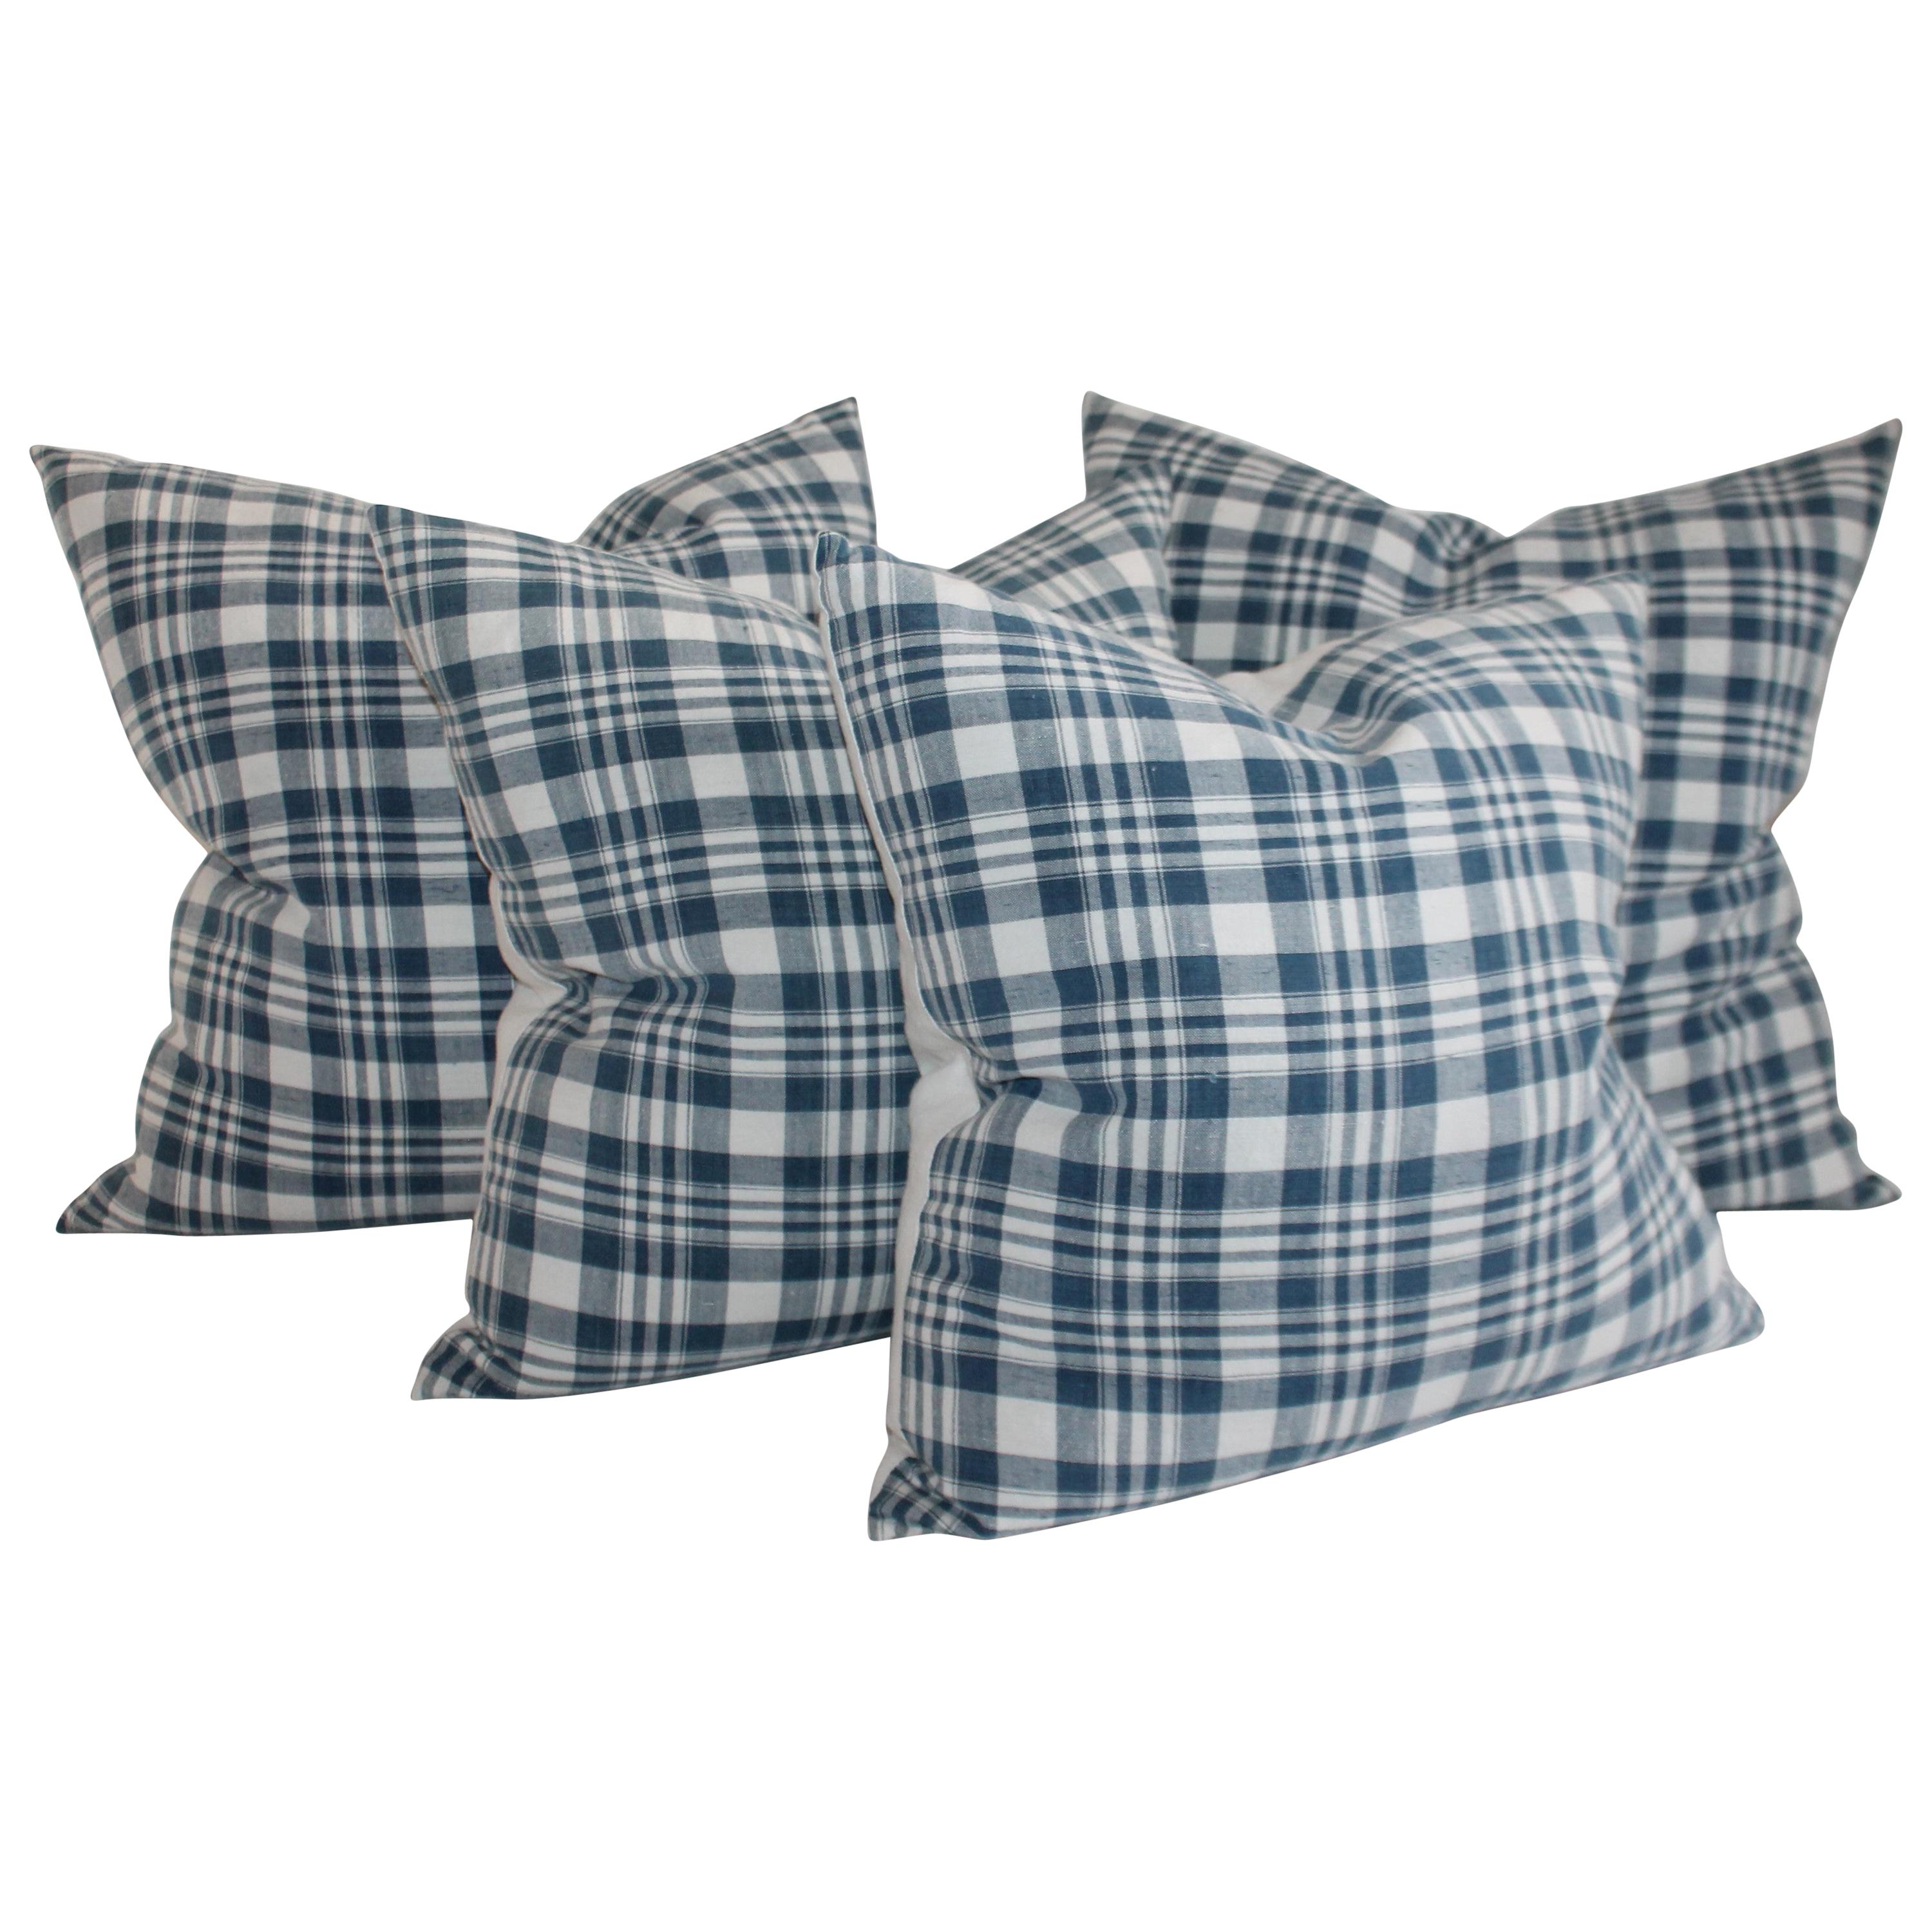 Muted Blue & White Homespun Linen Pillows, Collection of Four Pillows